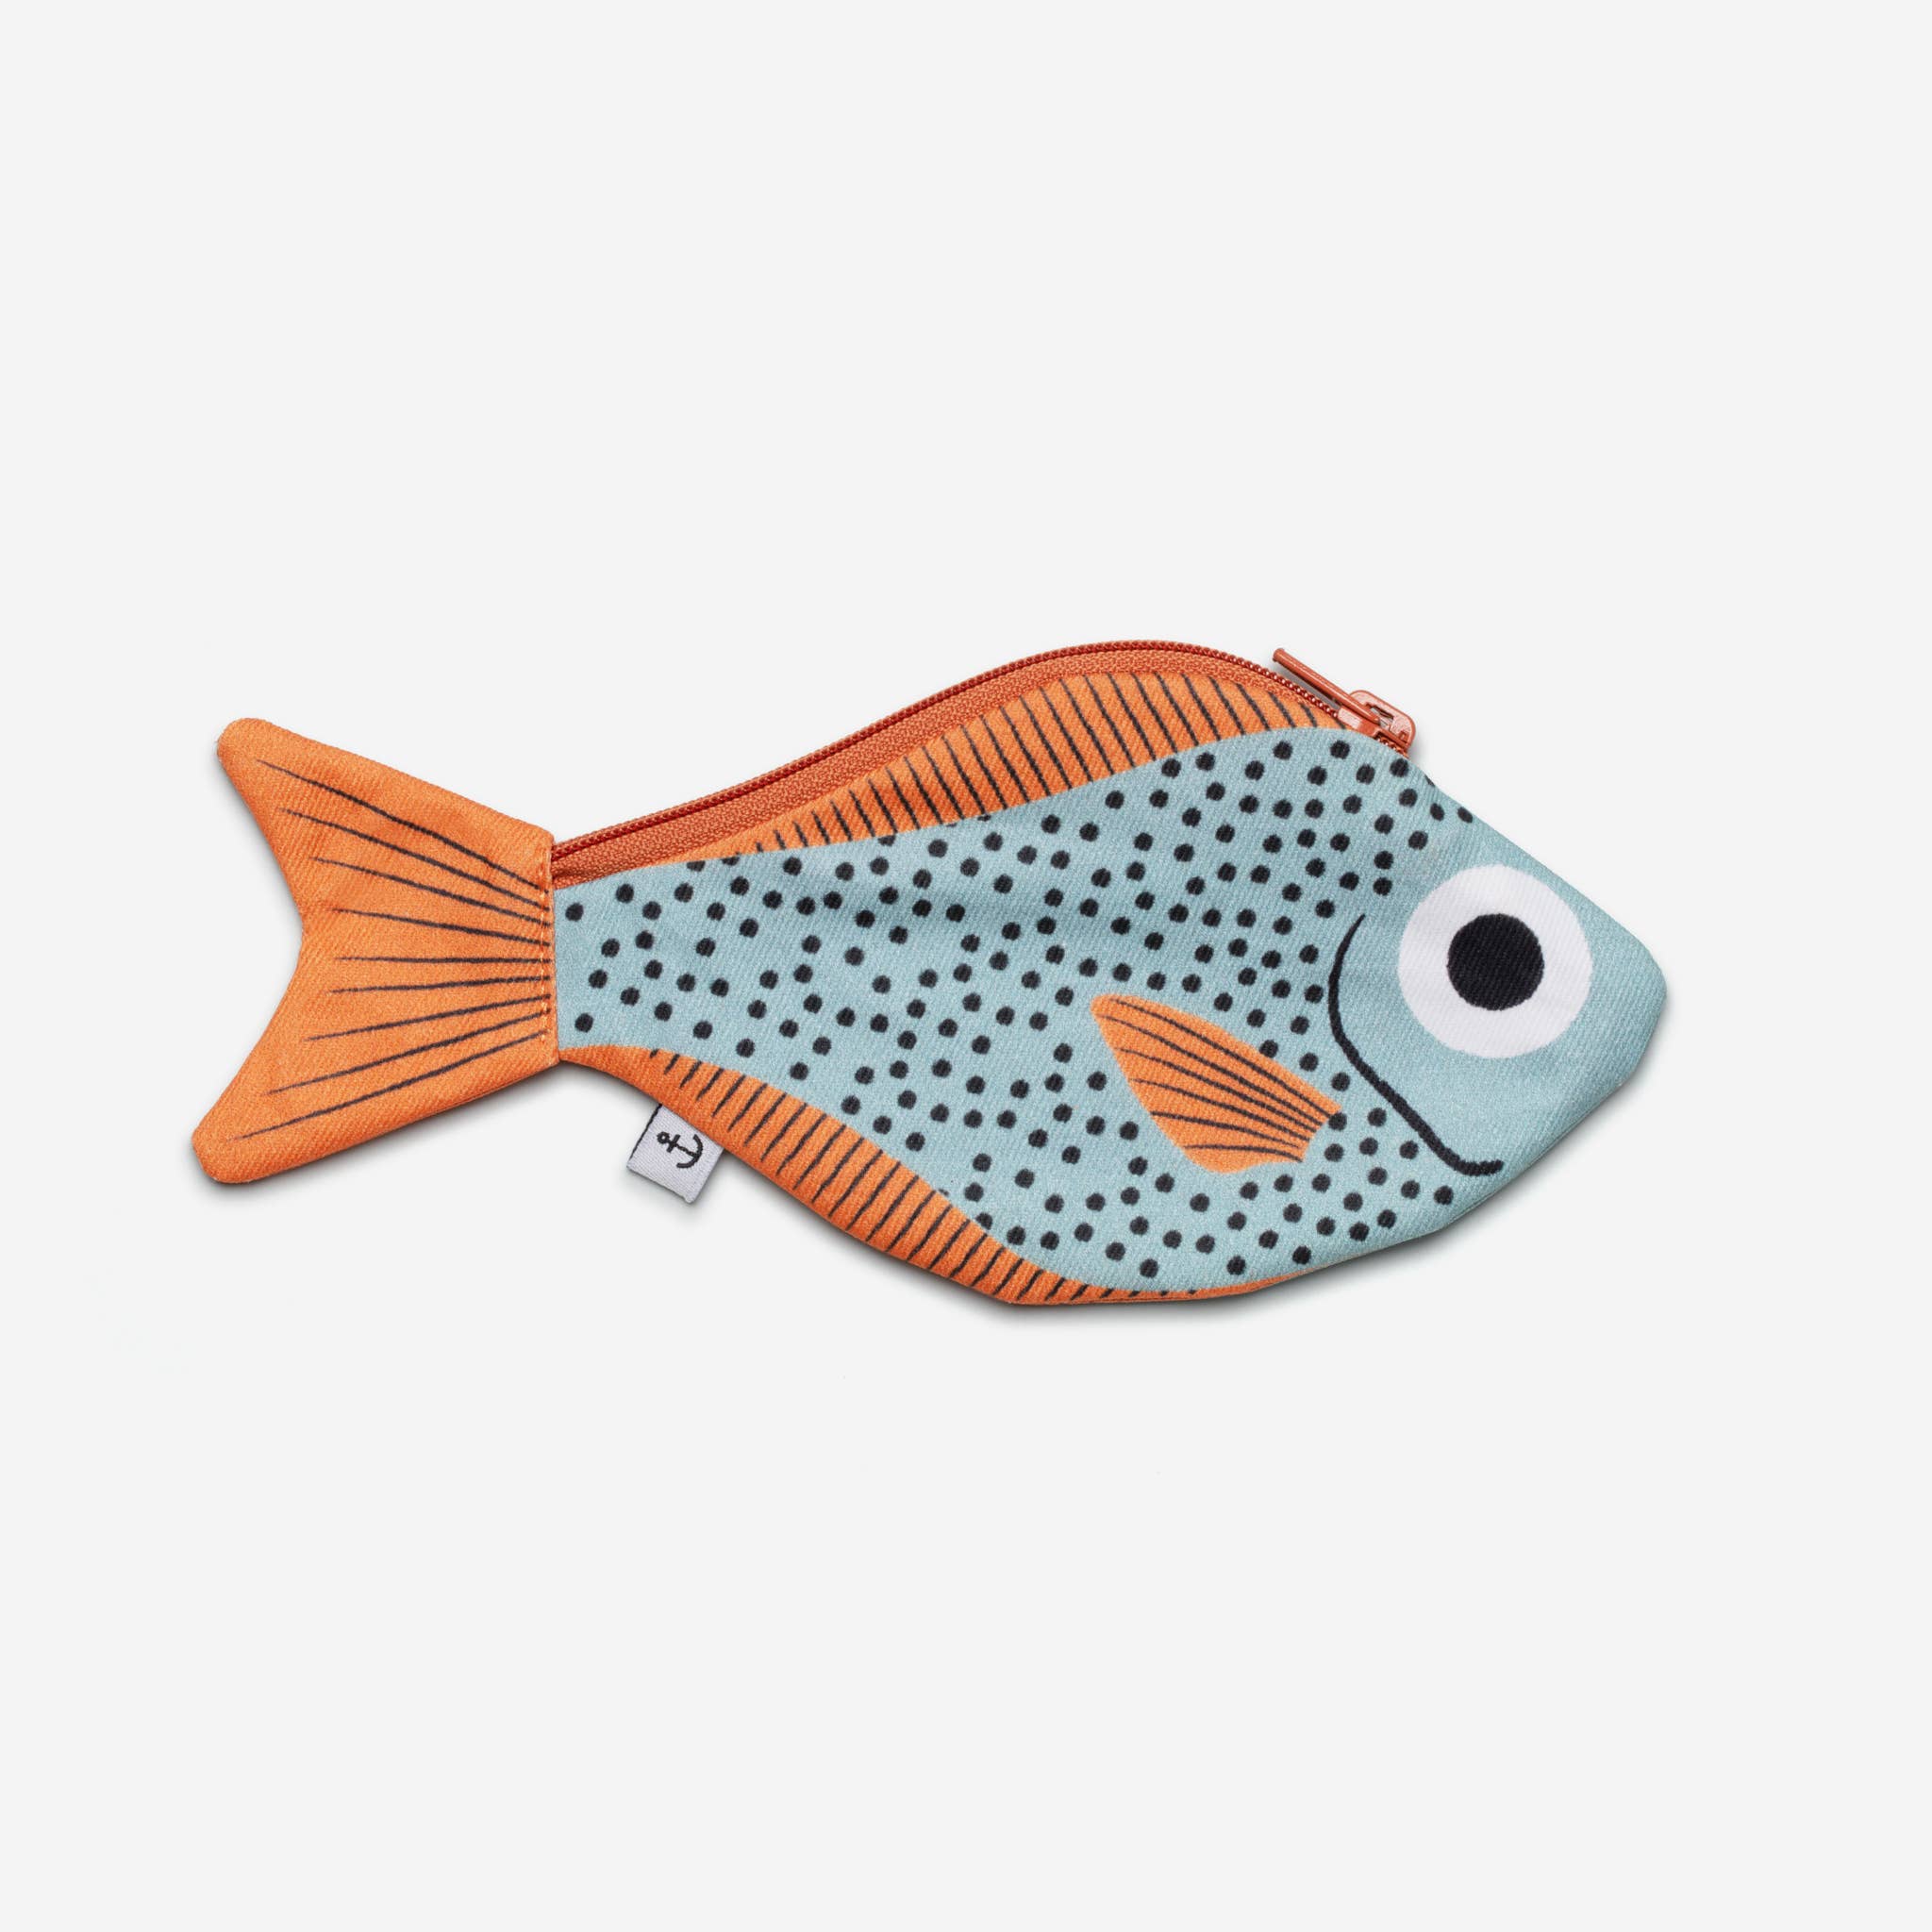 Aqua Sweeper fish, Geldbörse, wasserdicht